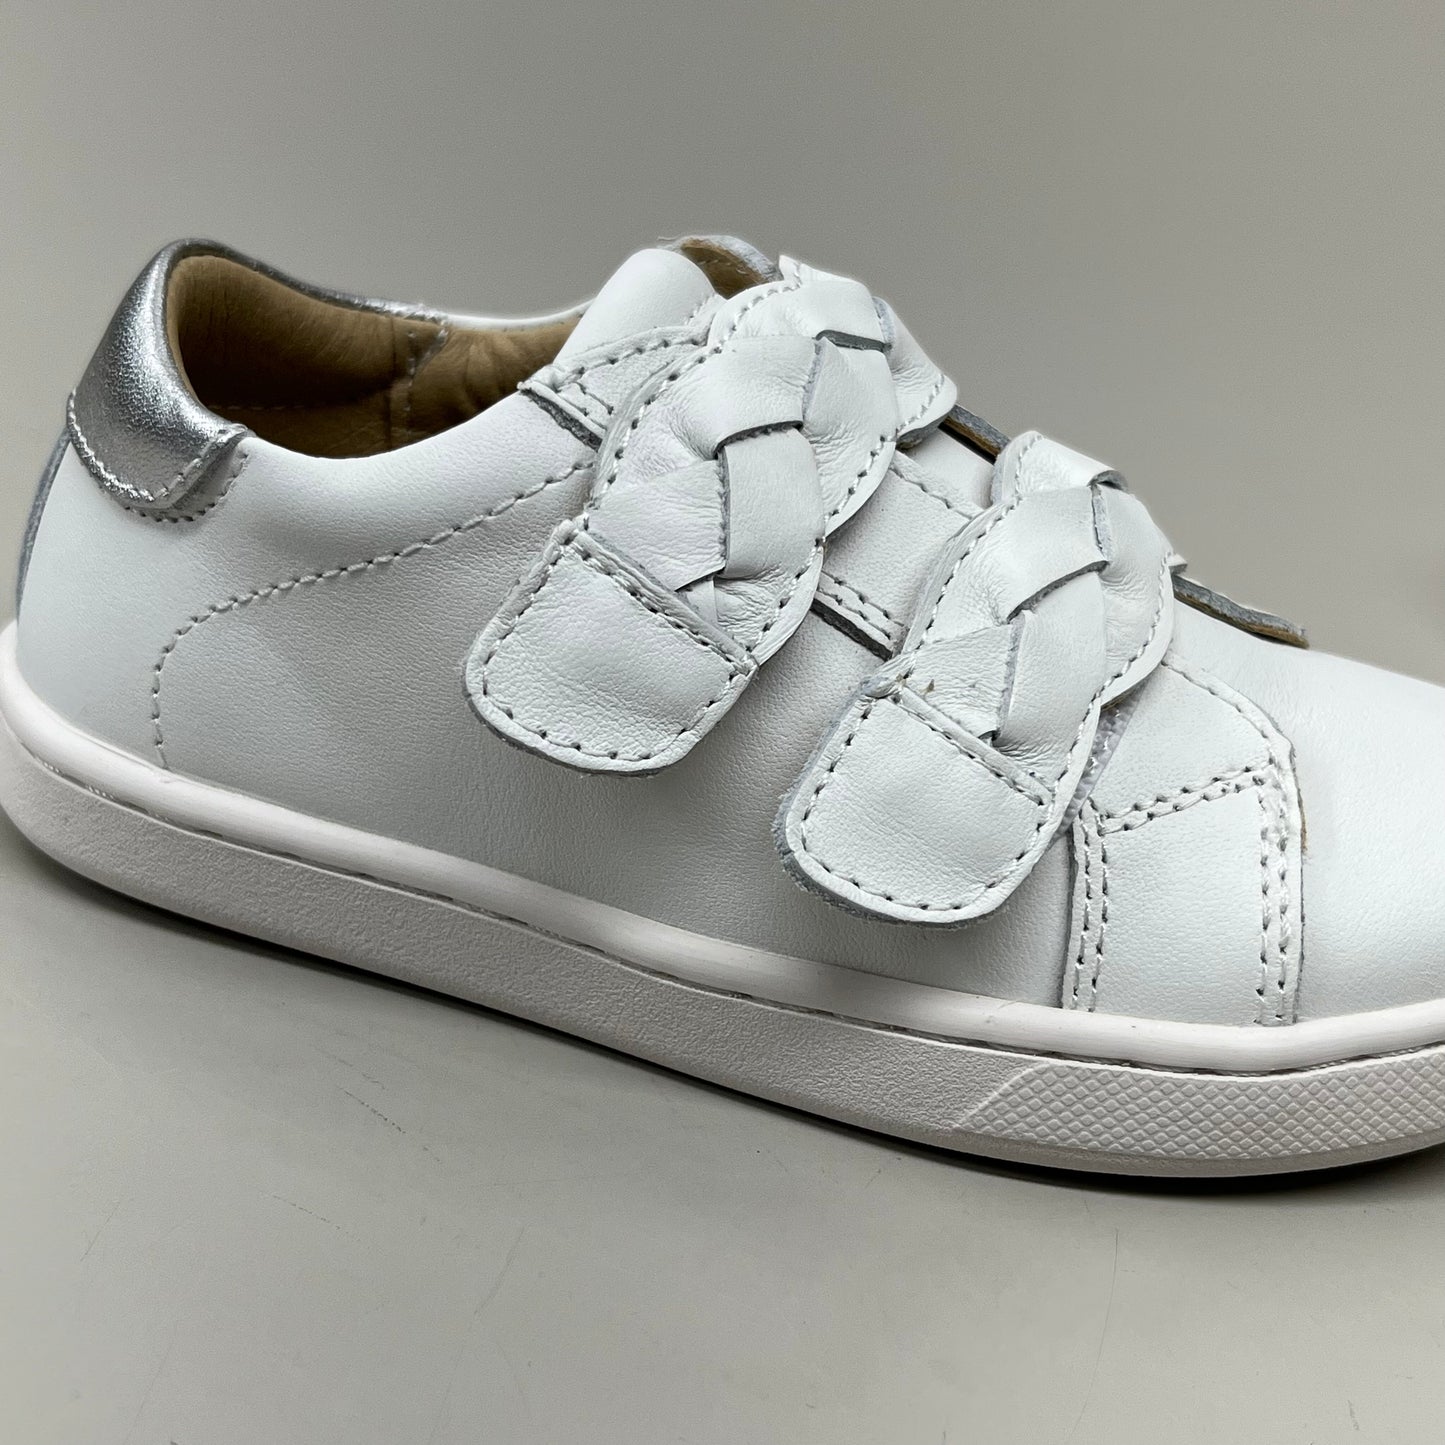 OLD SOLES Baby Plats Leather Shoe Sz 10 EU 27 Snow / Silver #6134